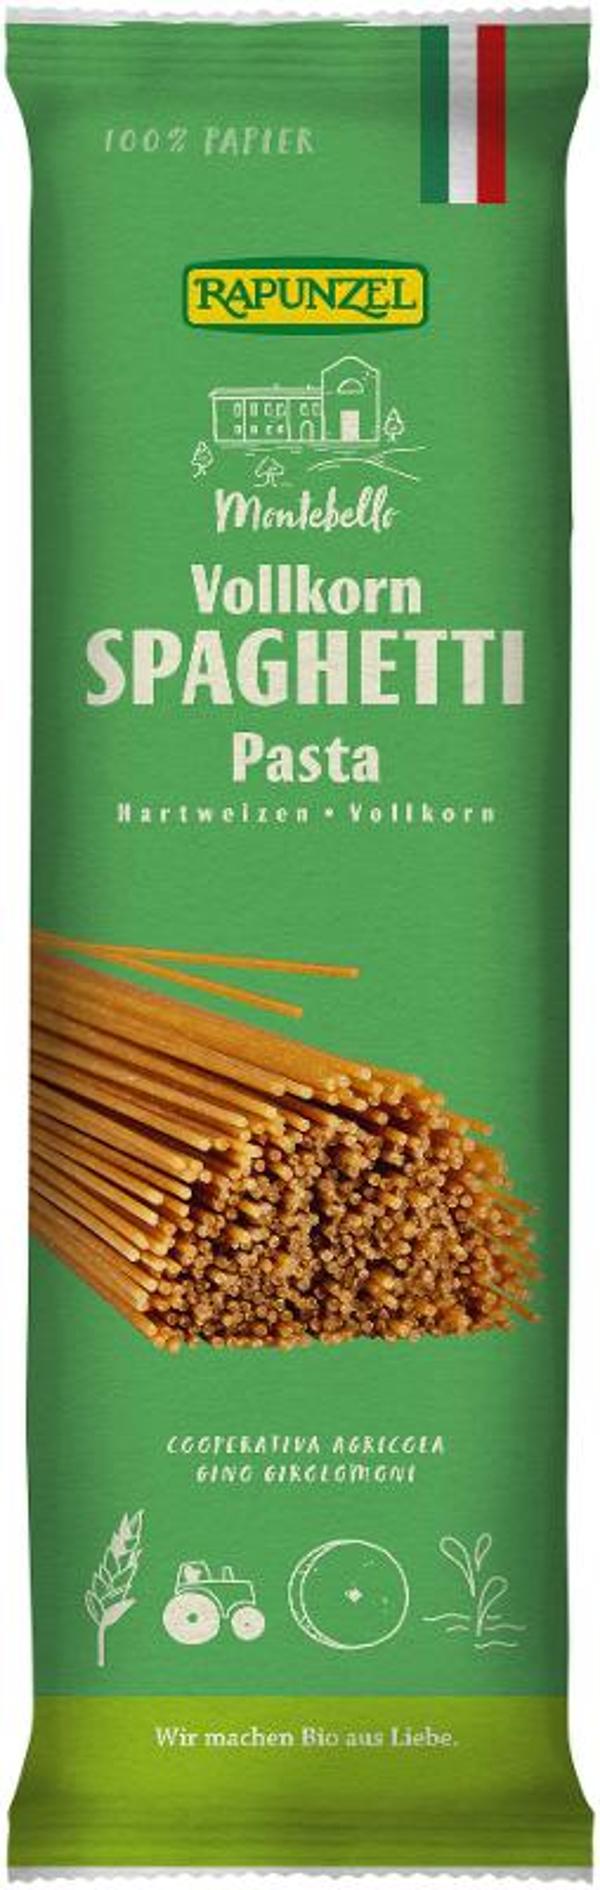 Produktfoto zu Spaghetti Vollkorn  500 g